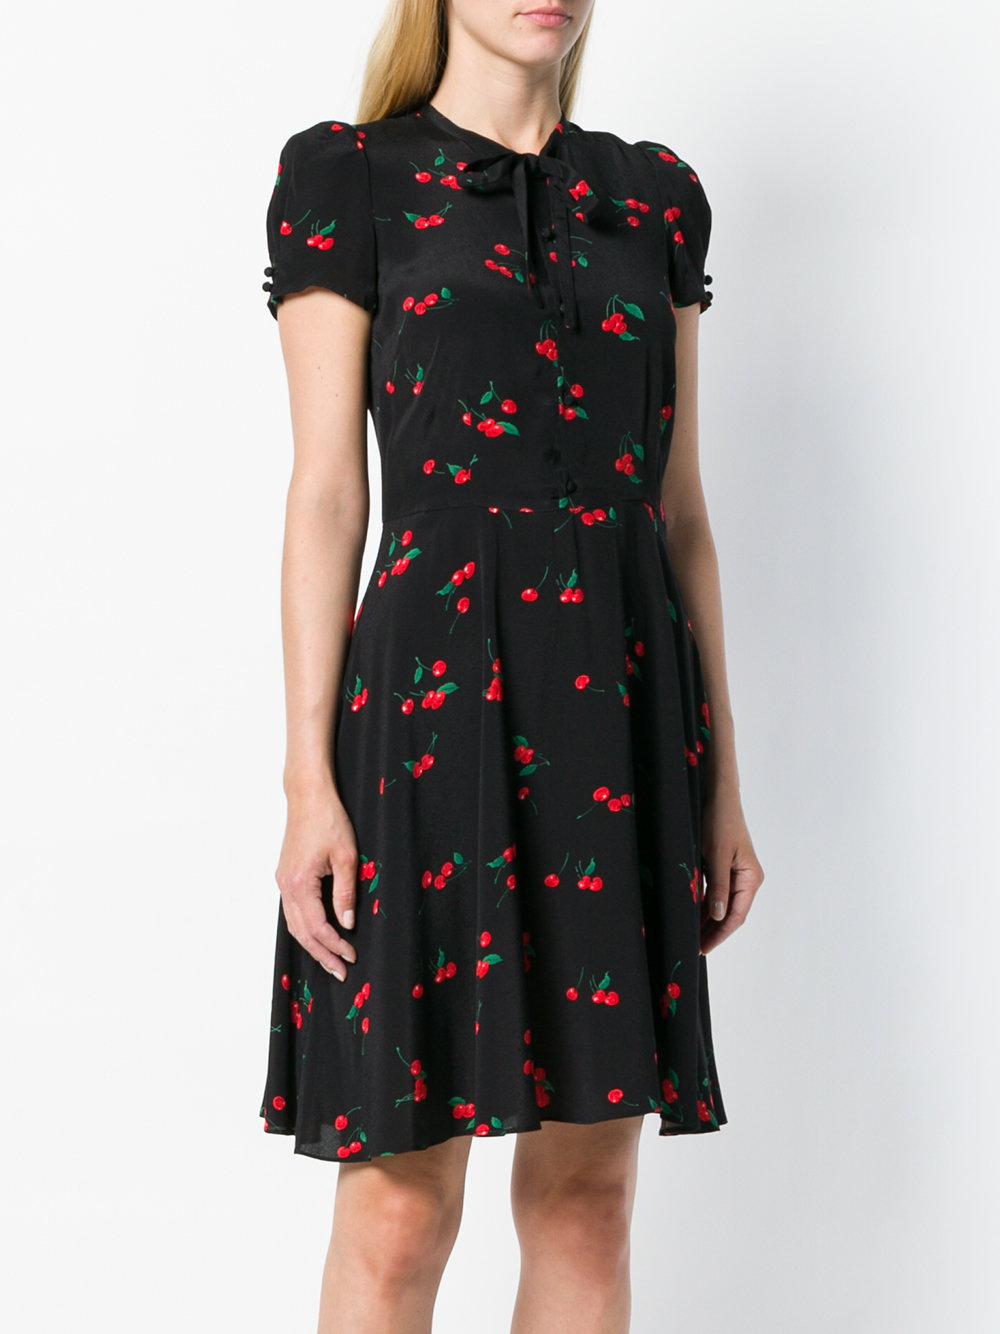 Polo Ralph Lauren Synthetic Cherry Print Dress in Black - Lyst